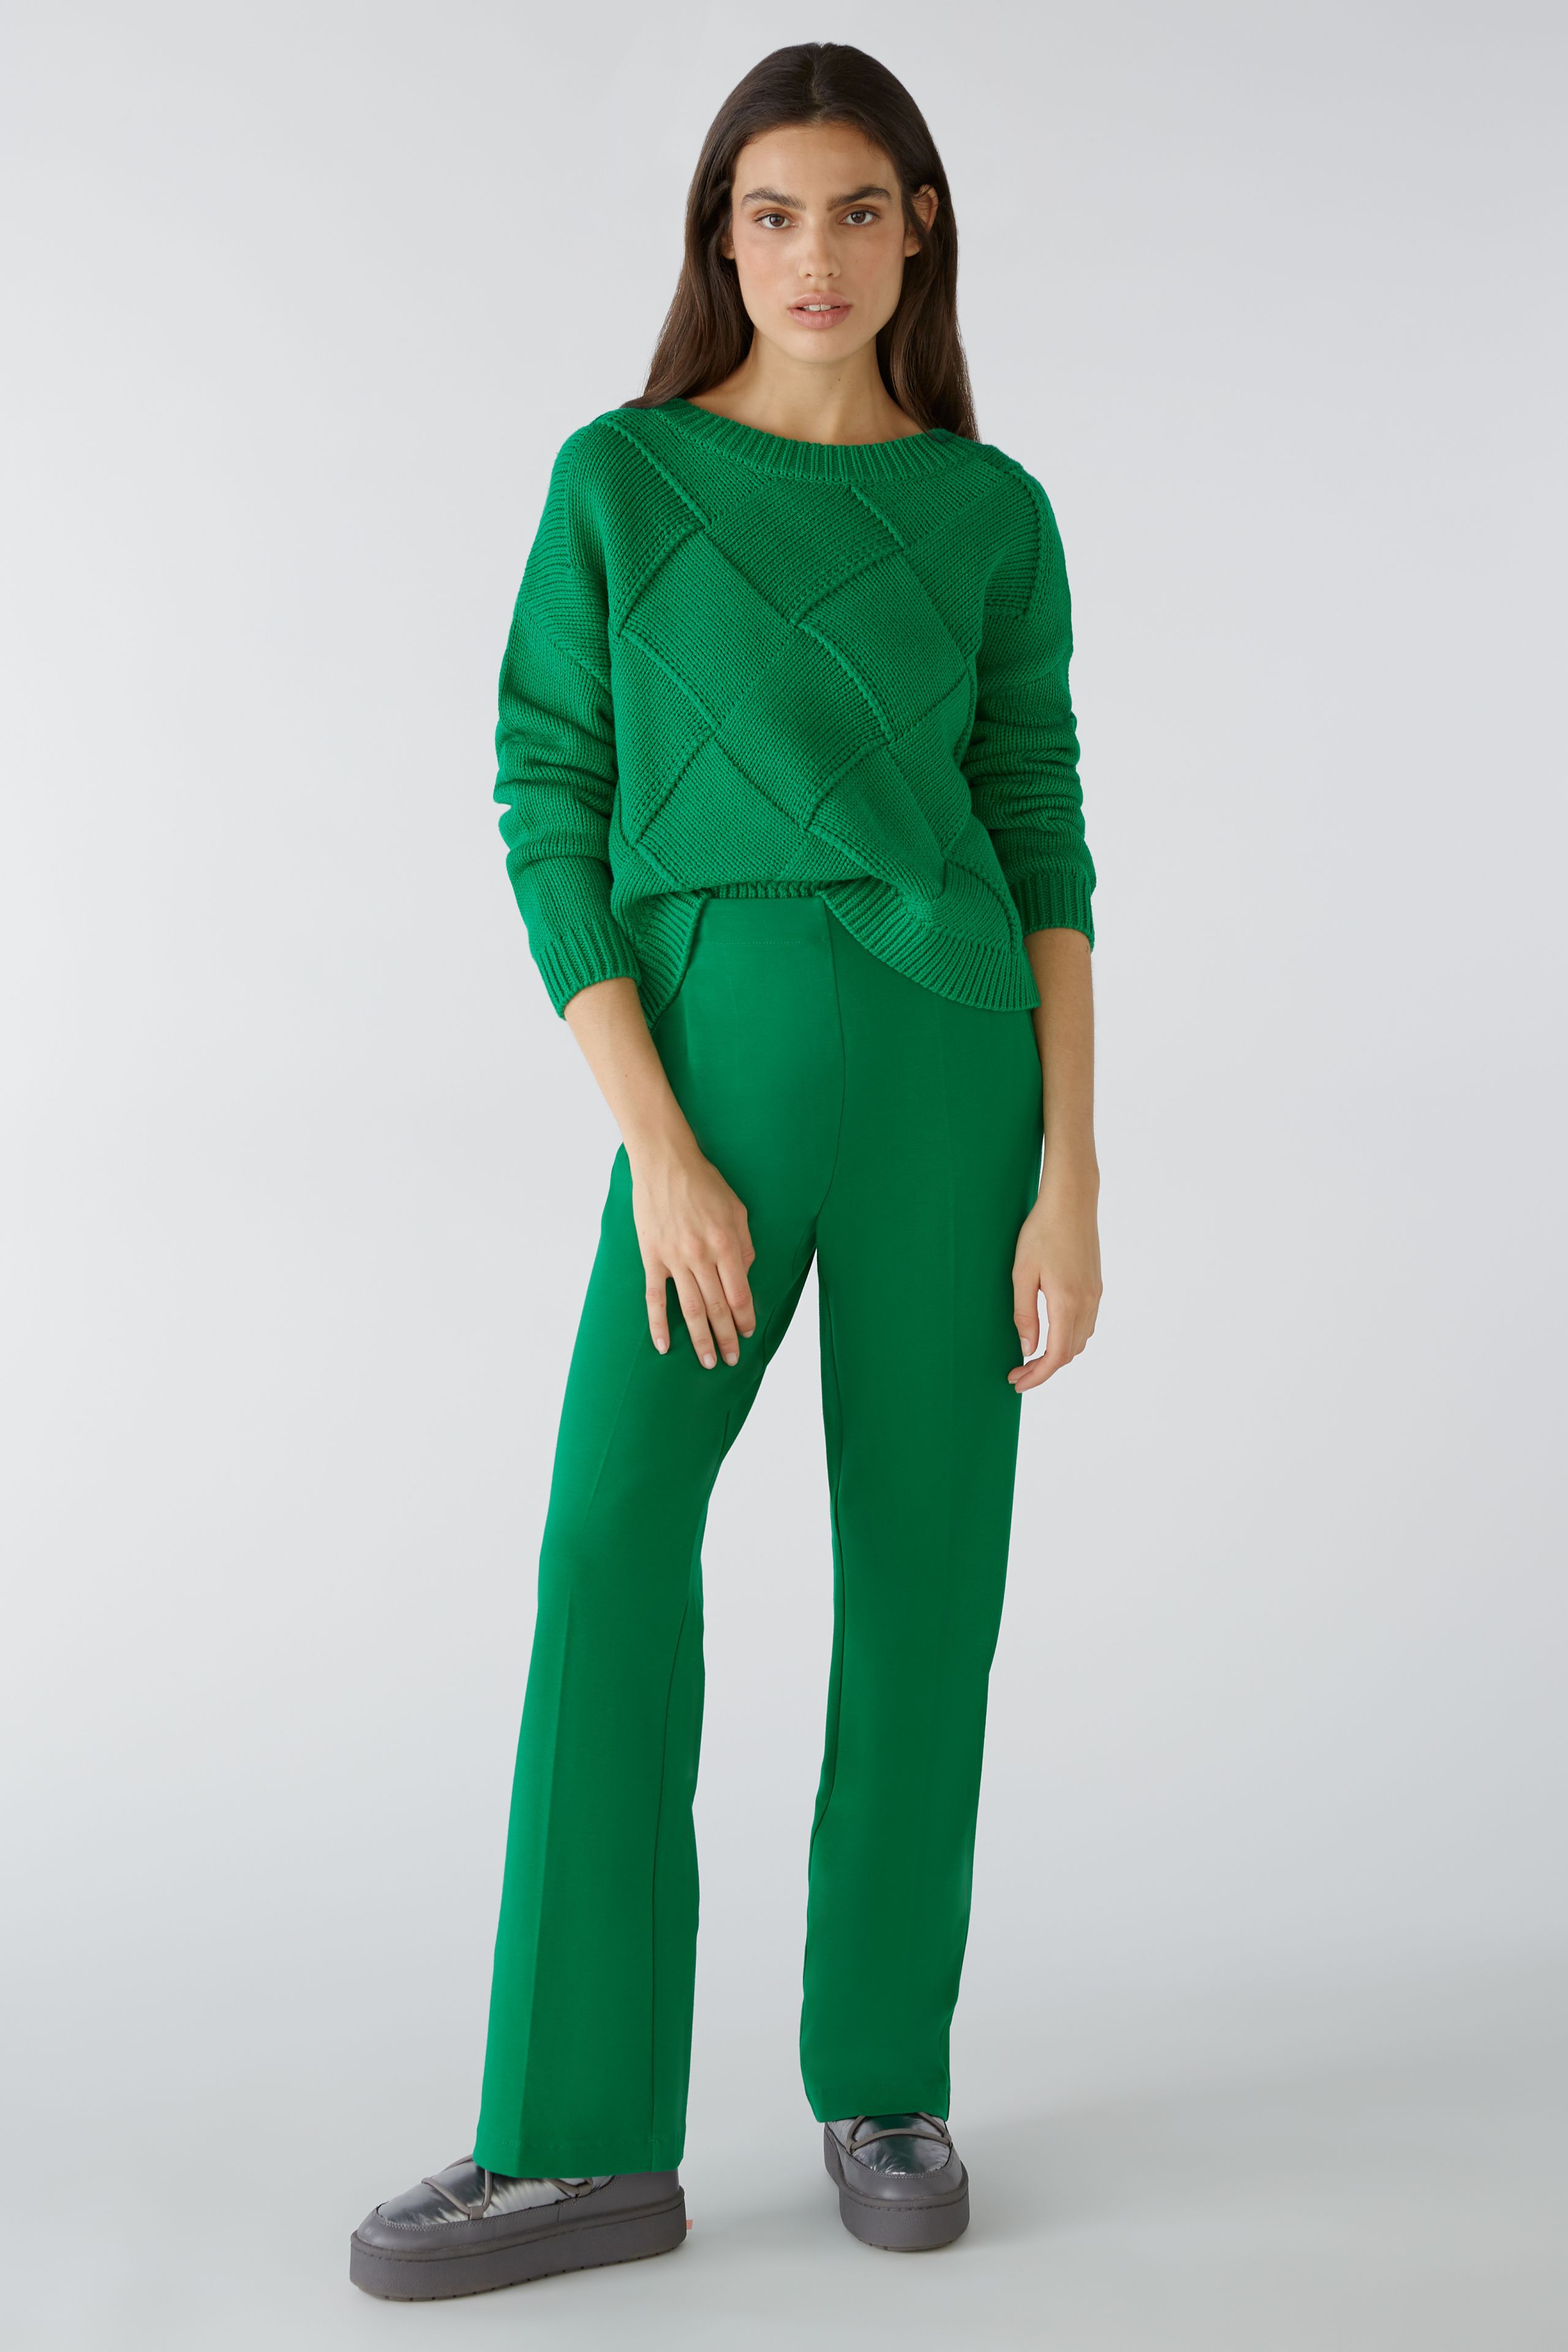 Oui Damen Boxy Pullover - grün 40